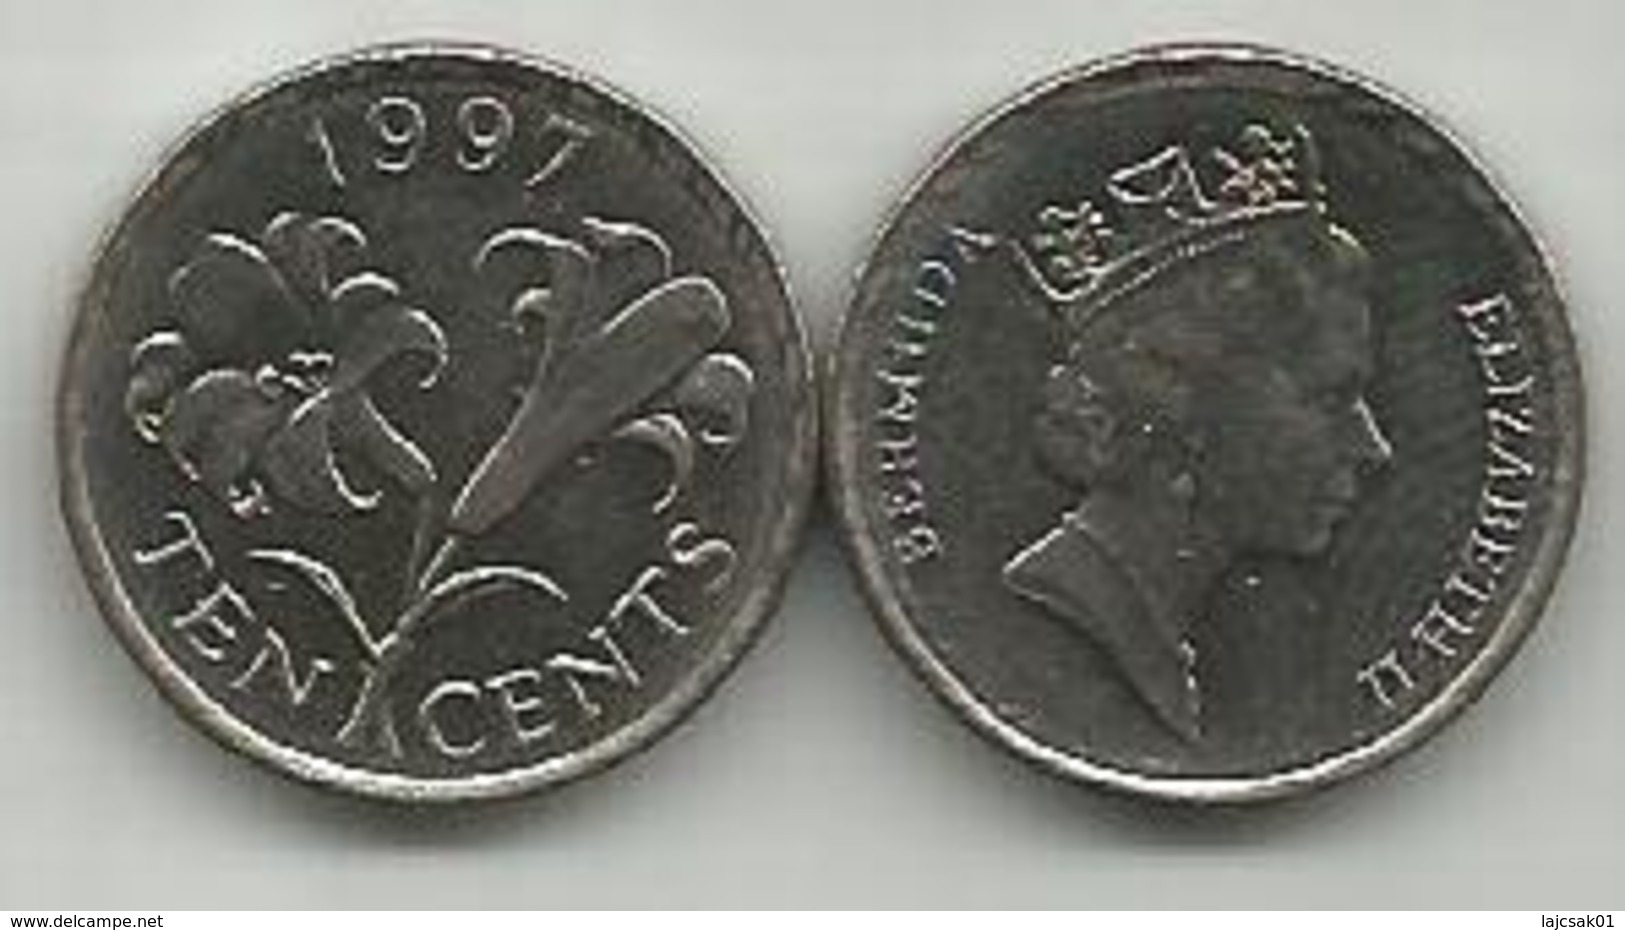 Bermuda 10 Cents 1997. - Bermuda